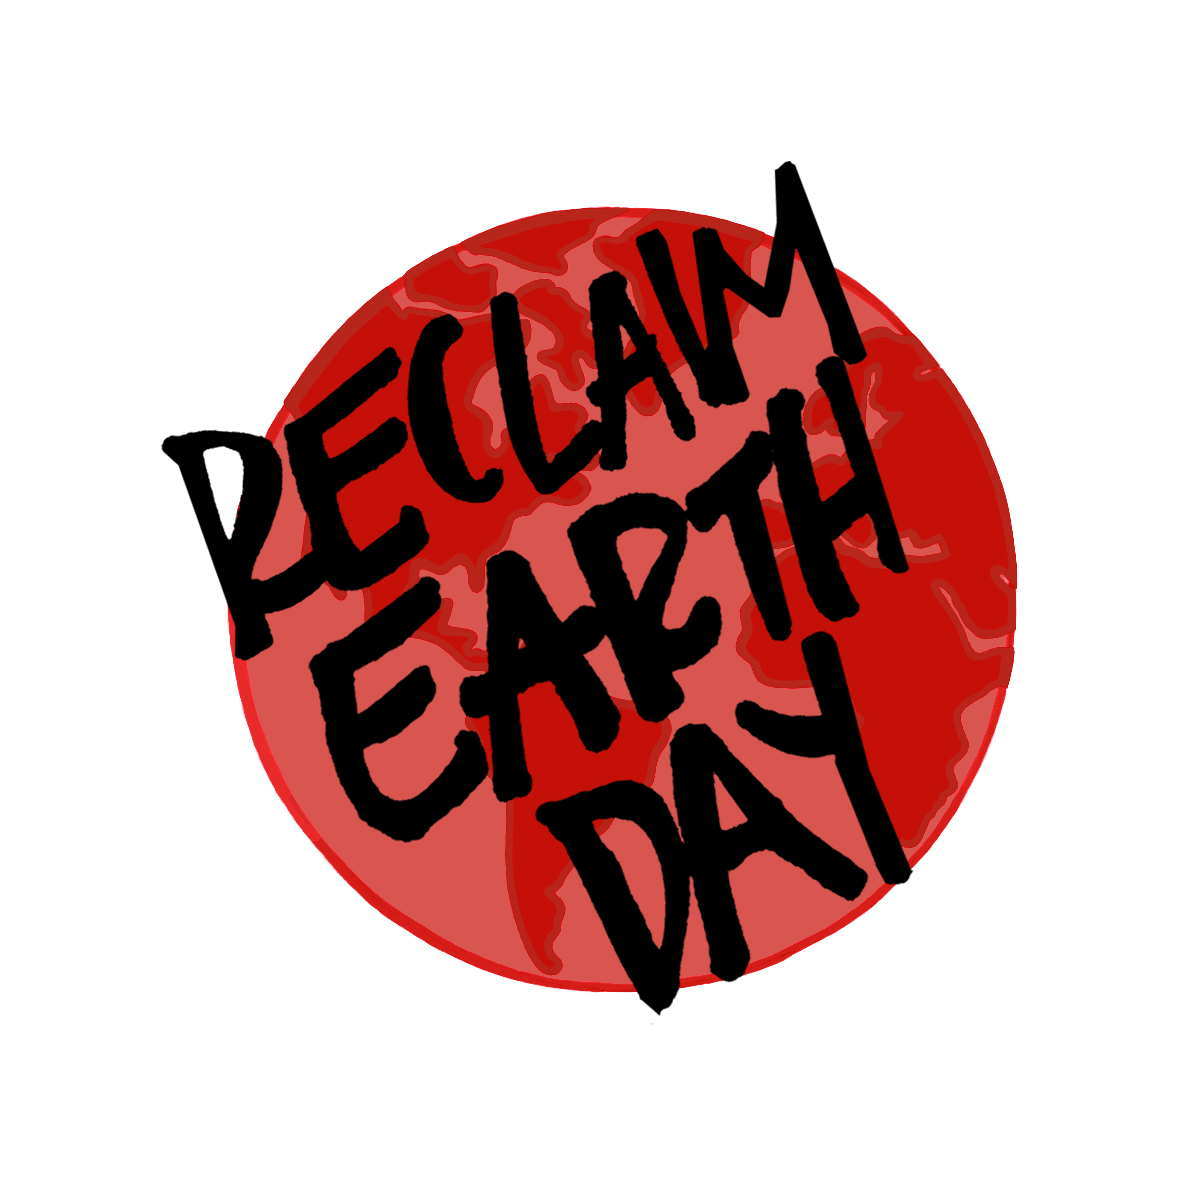 Reclaim Earth Day